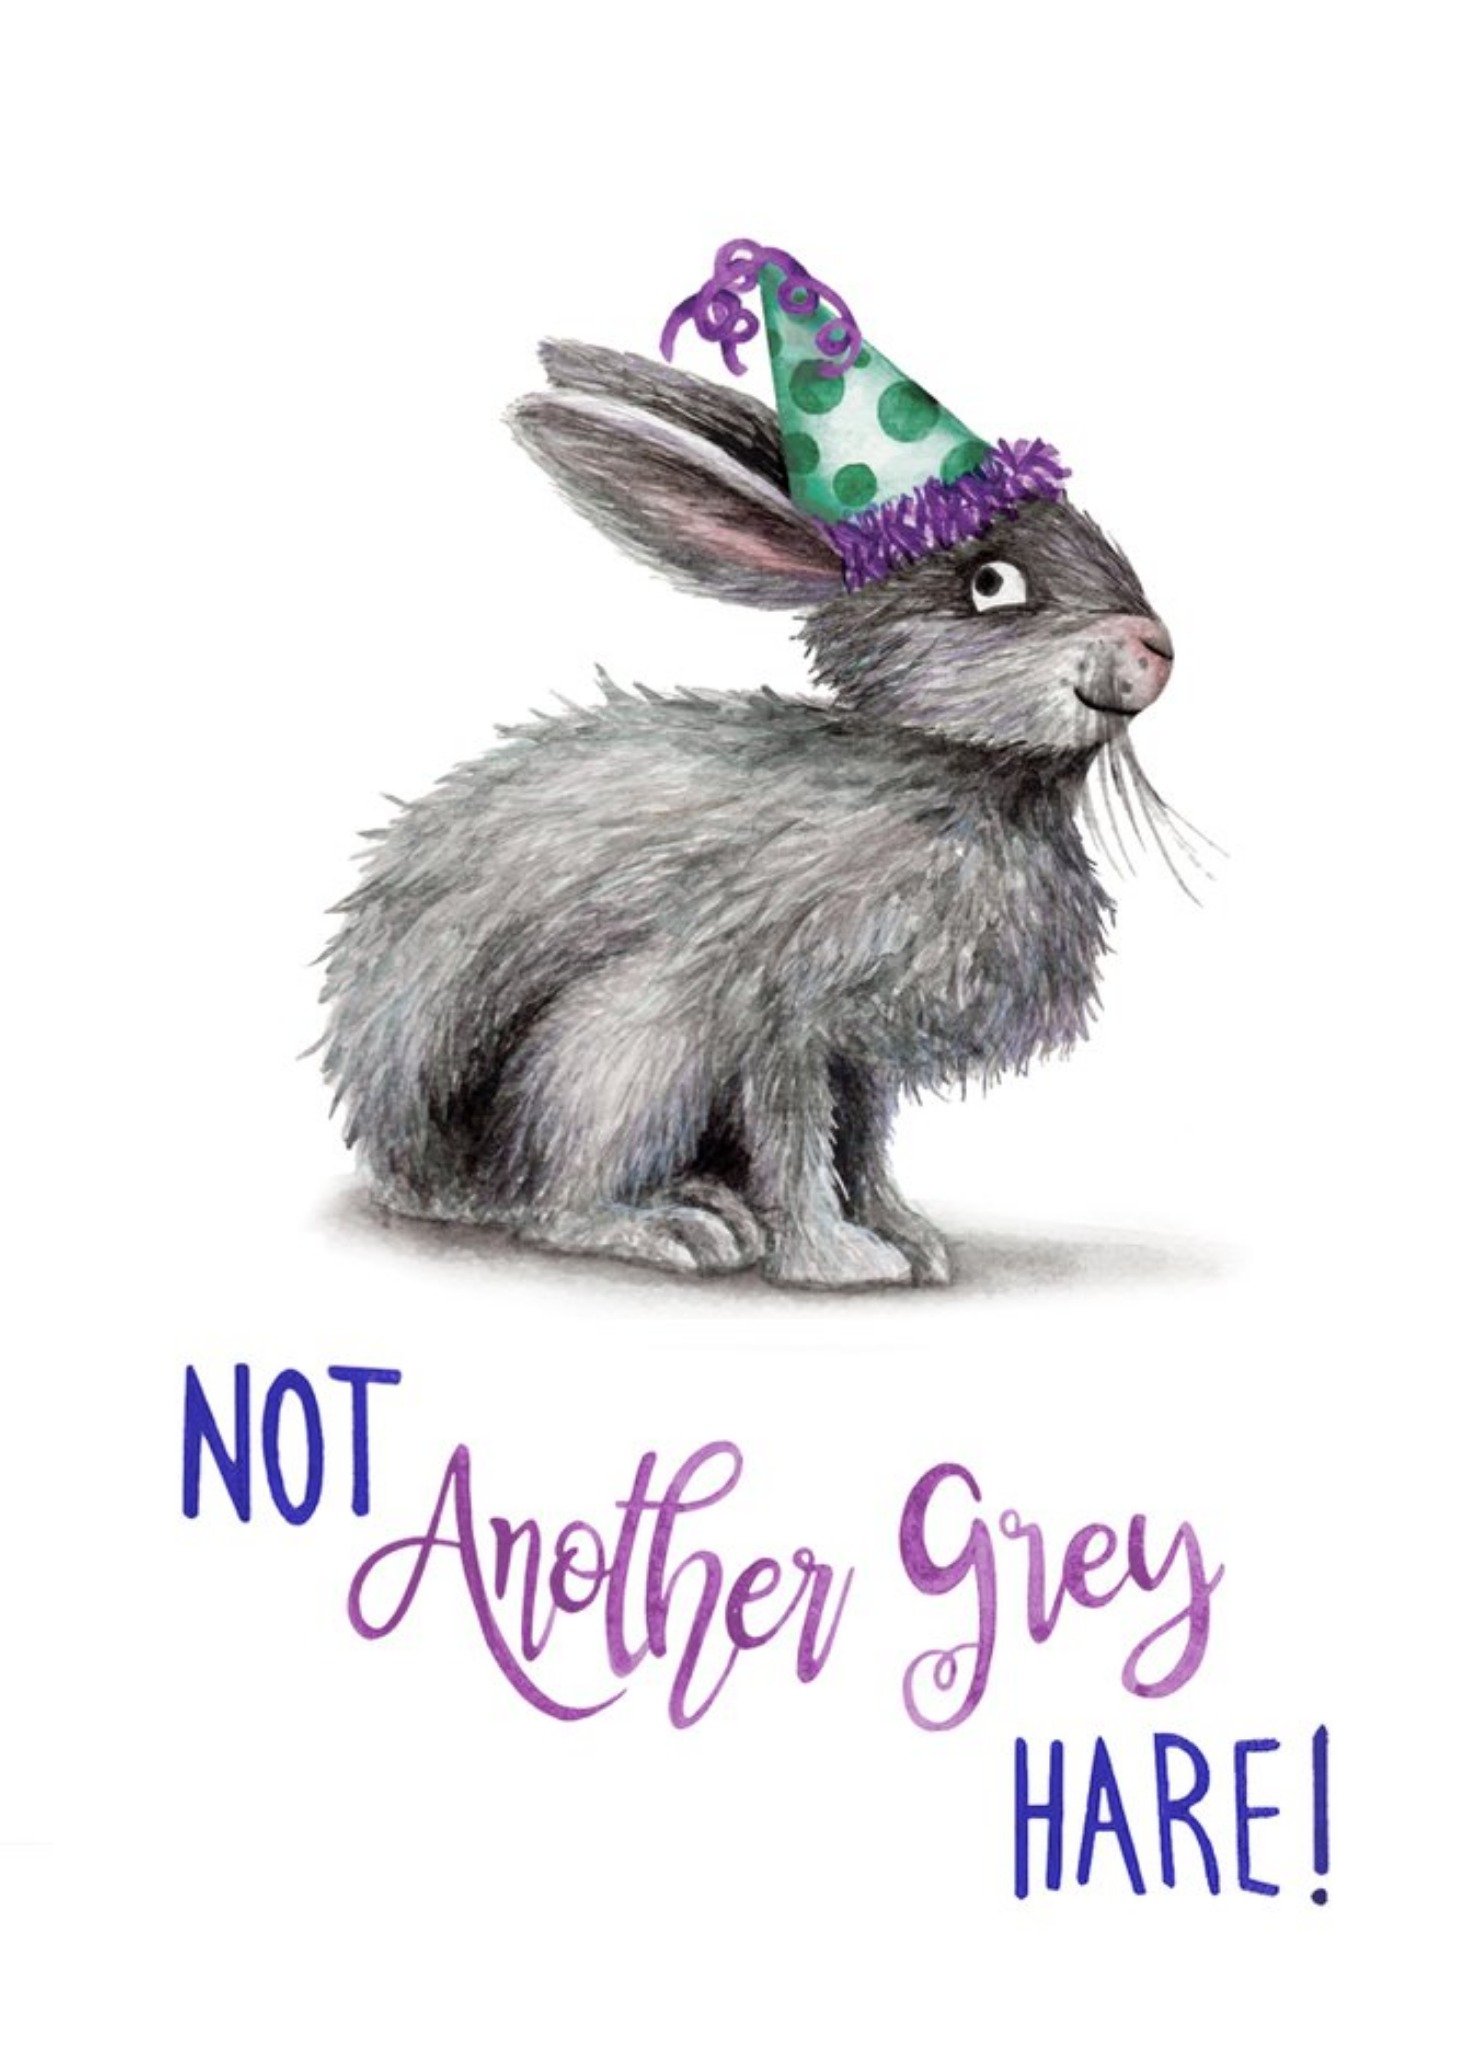 Moonpig Citrus Bunn Hare Pun Funny Cute Animal Party Birthday, Large Card